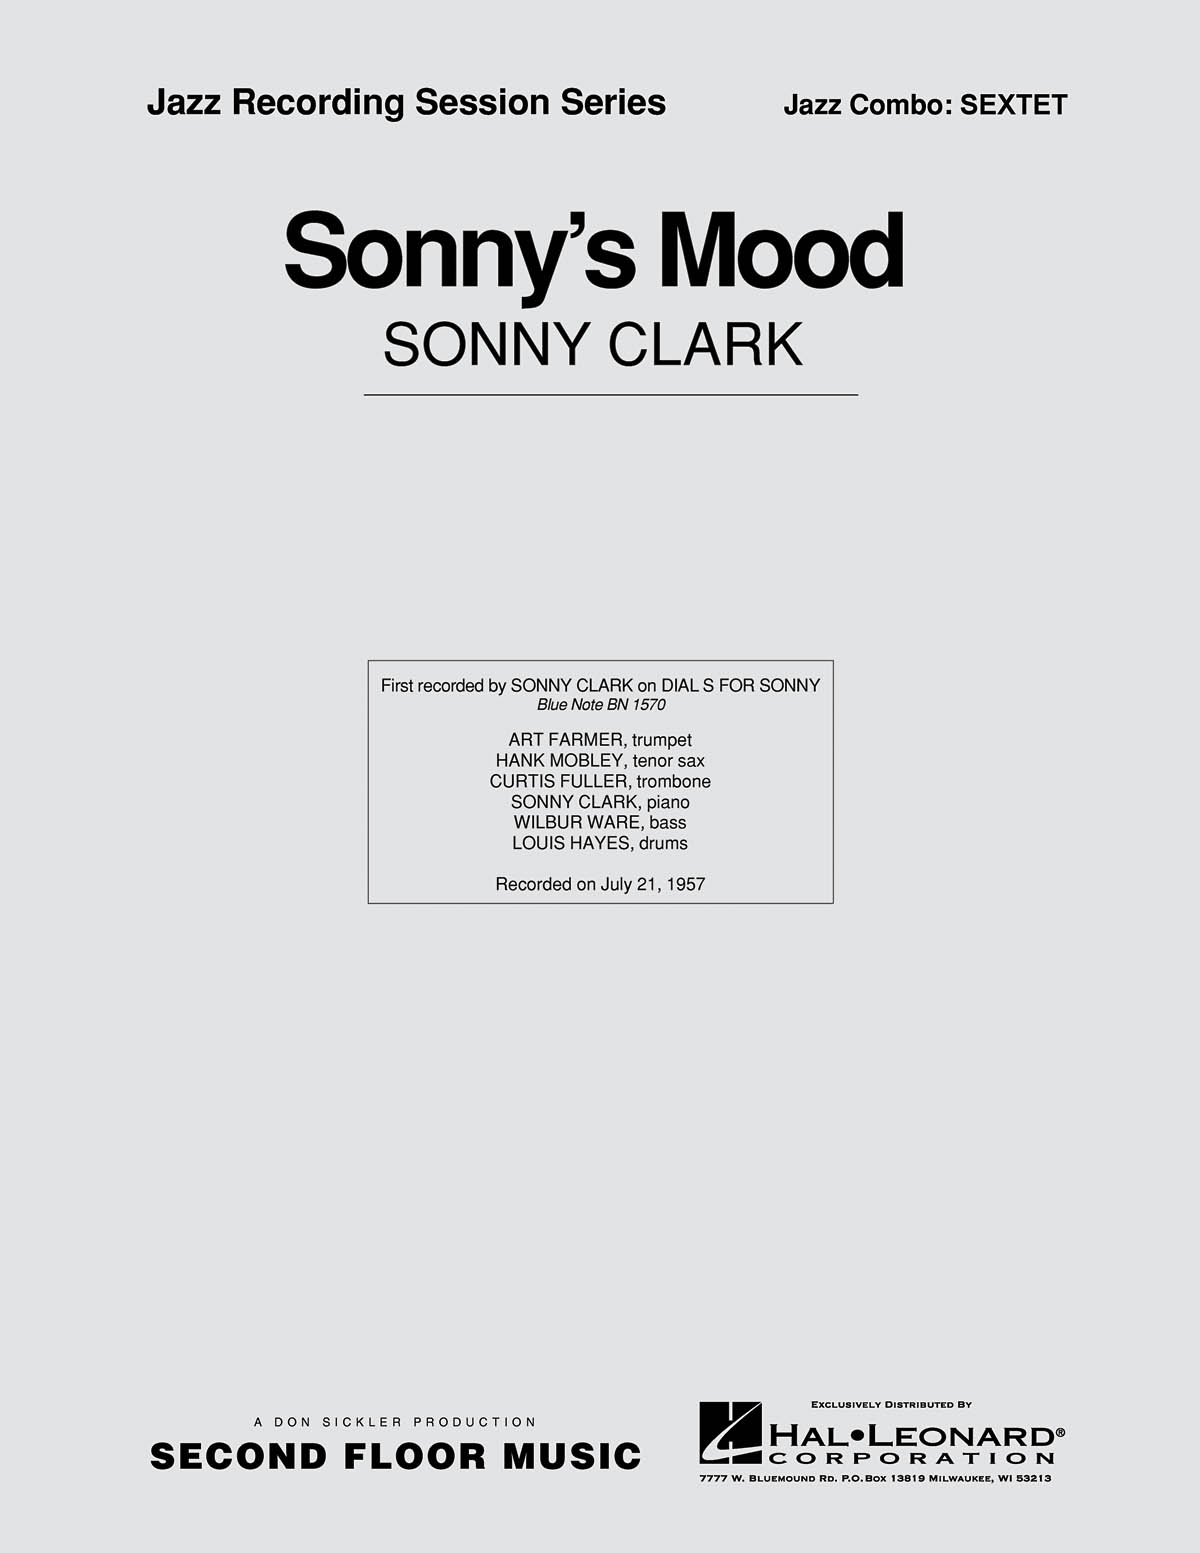 Sonny’s Mood